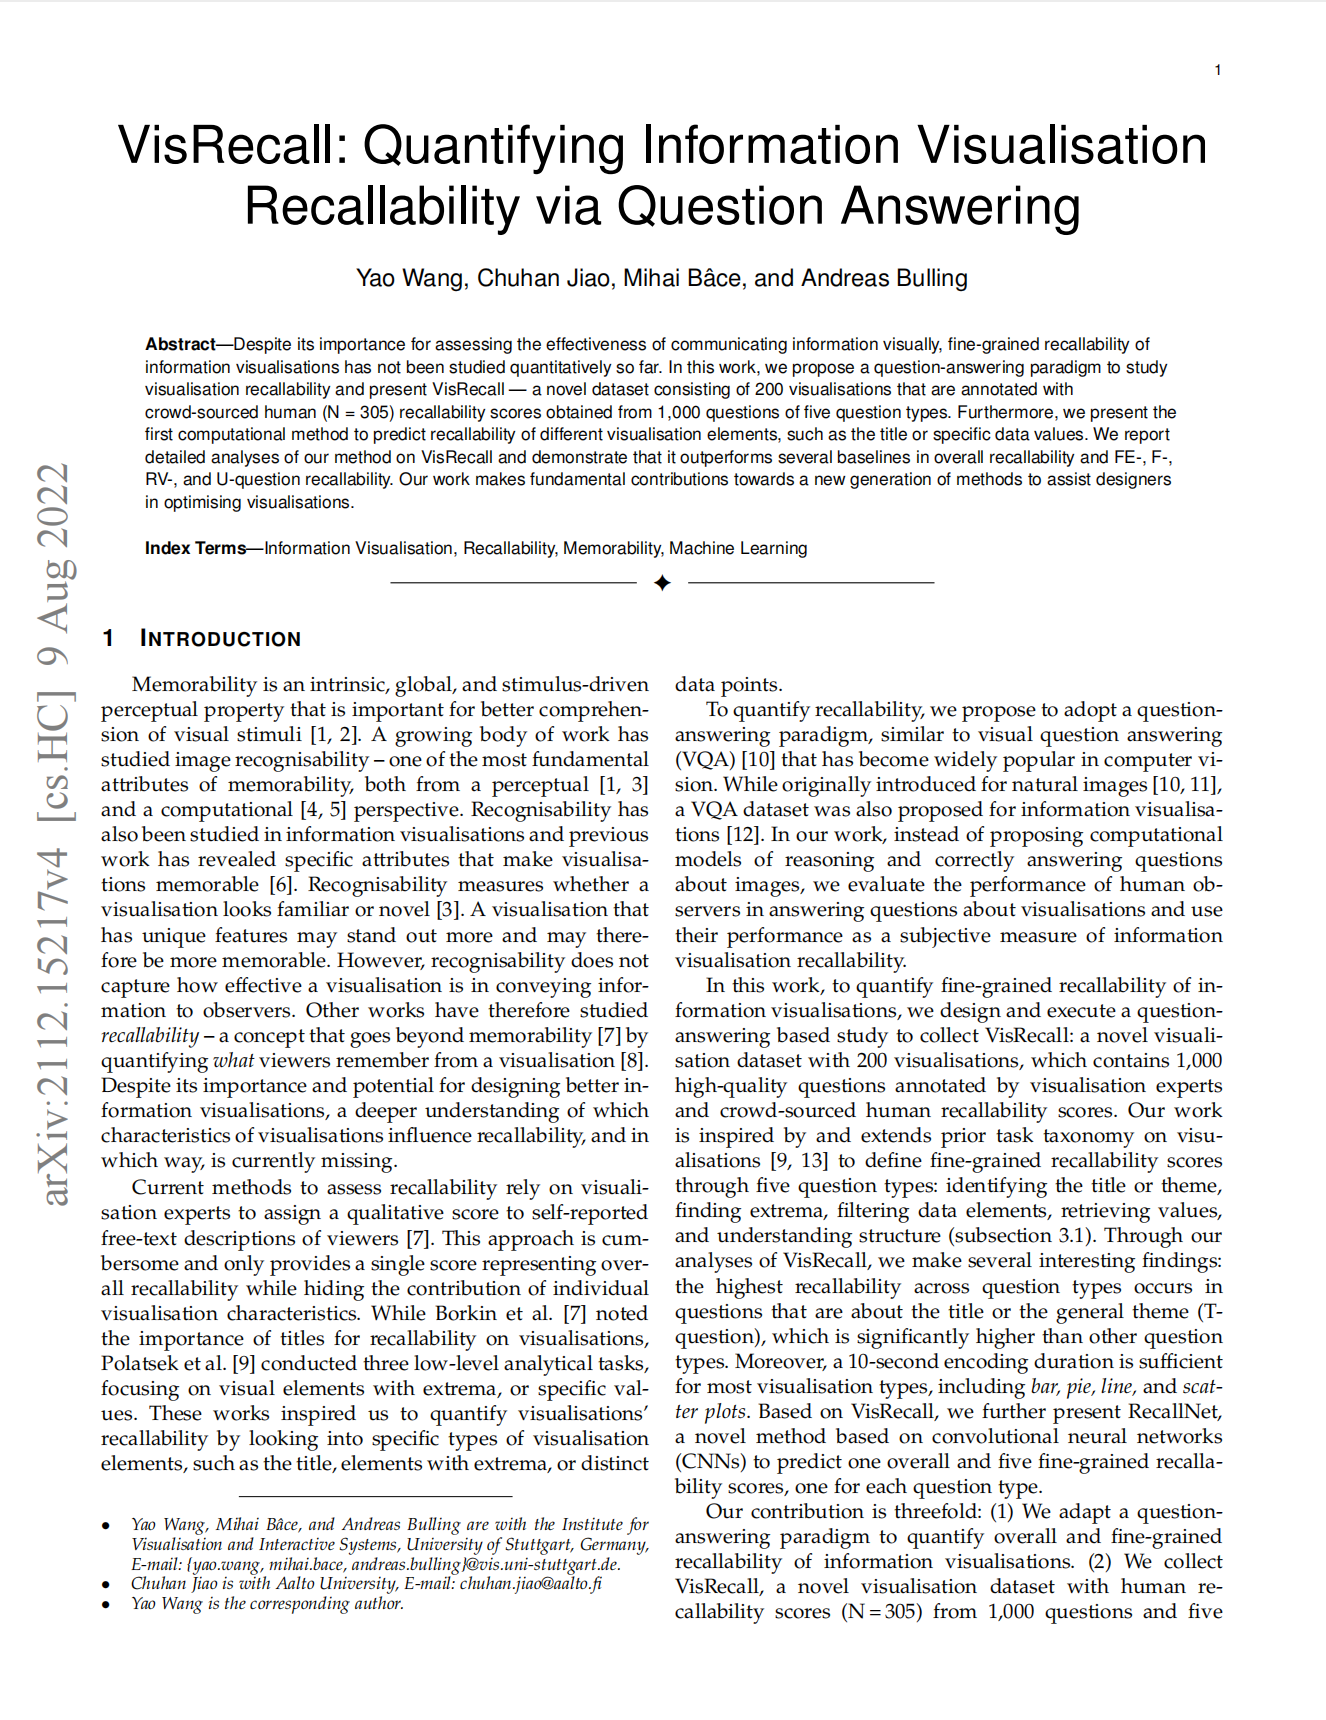 VisQA: Quantifying Information Visualisation Recallability via Question Answering